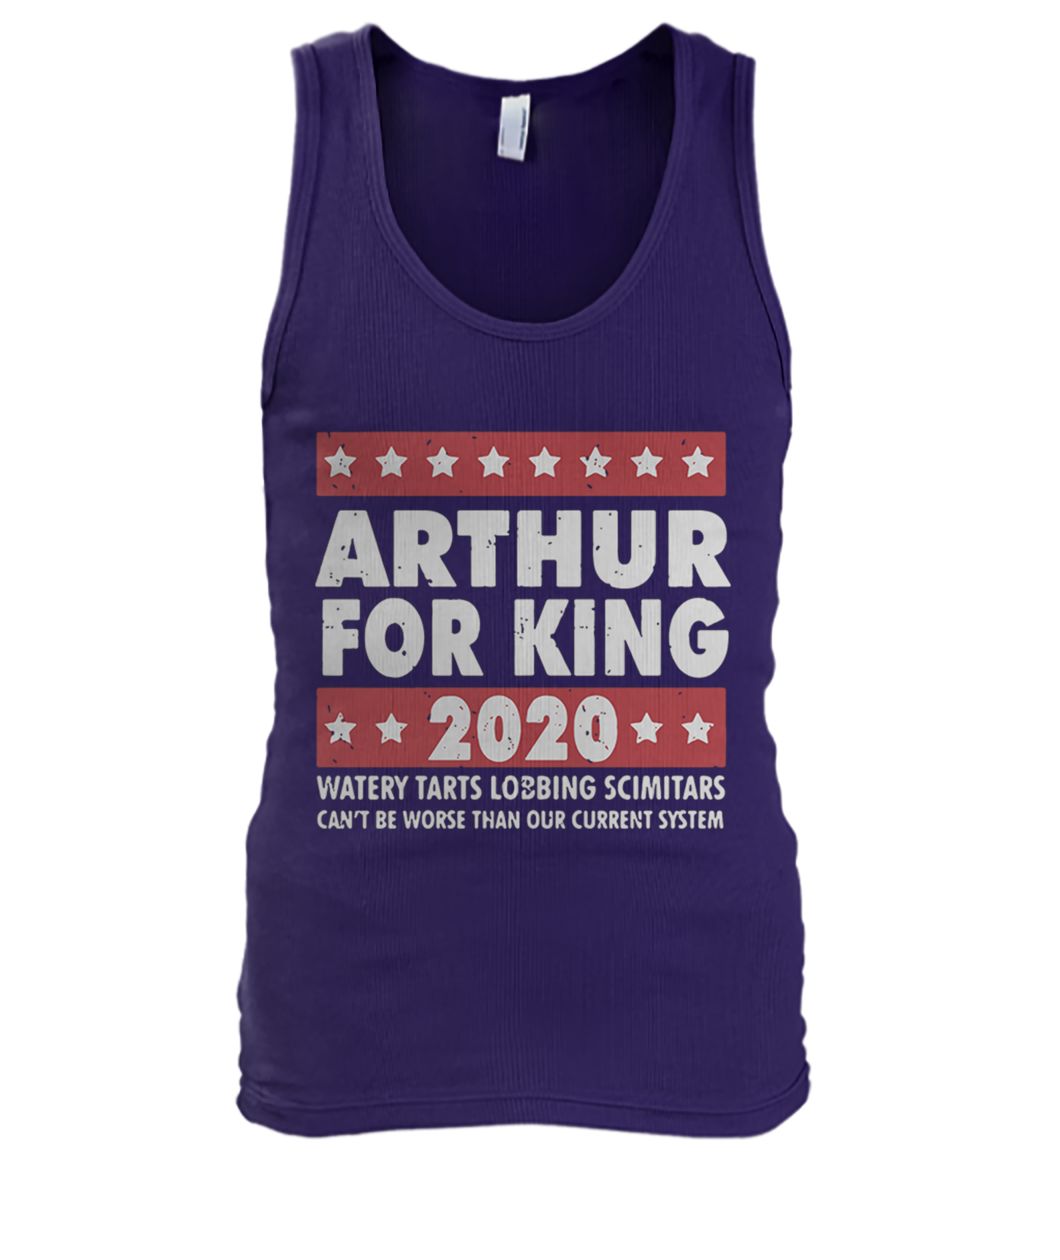 Arthur for king 2020 watery tarts lobbing scimitars men's tank top